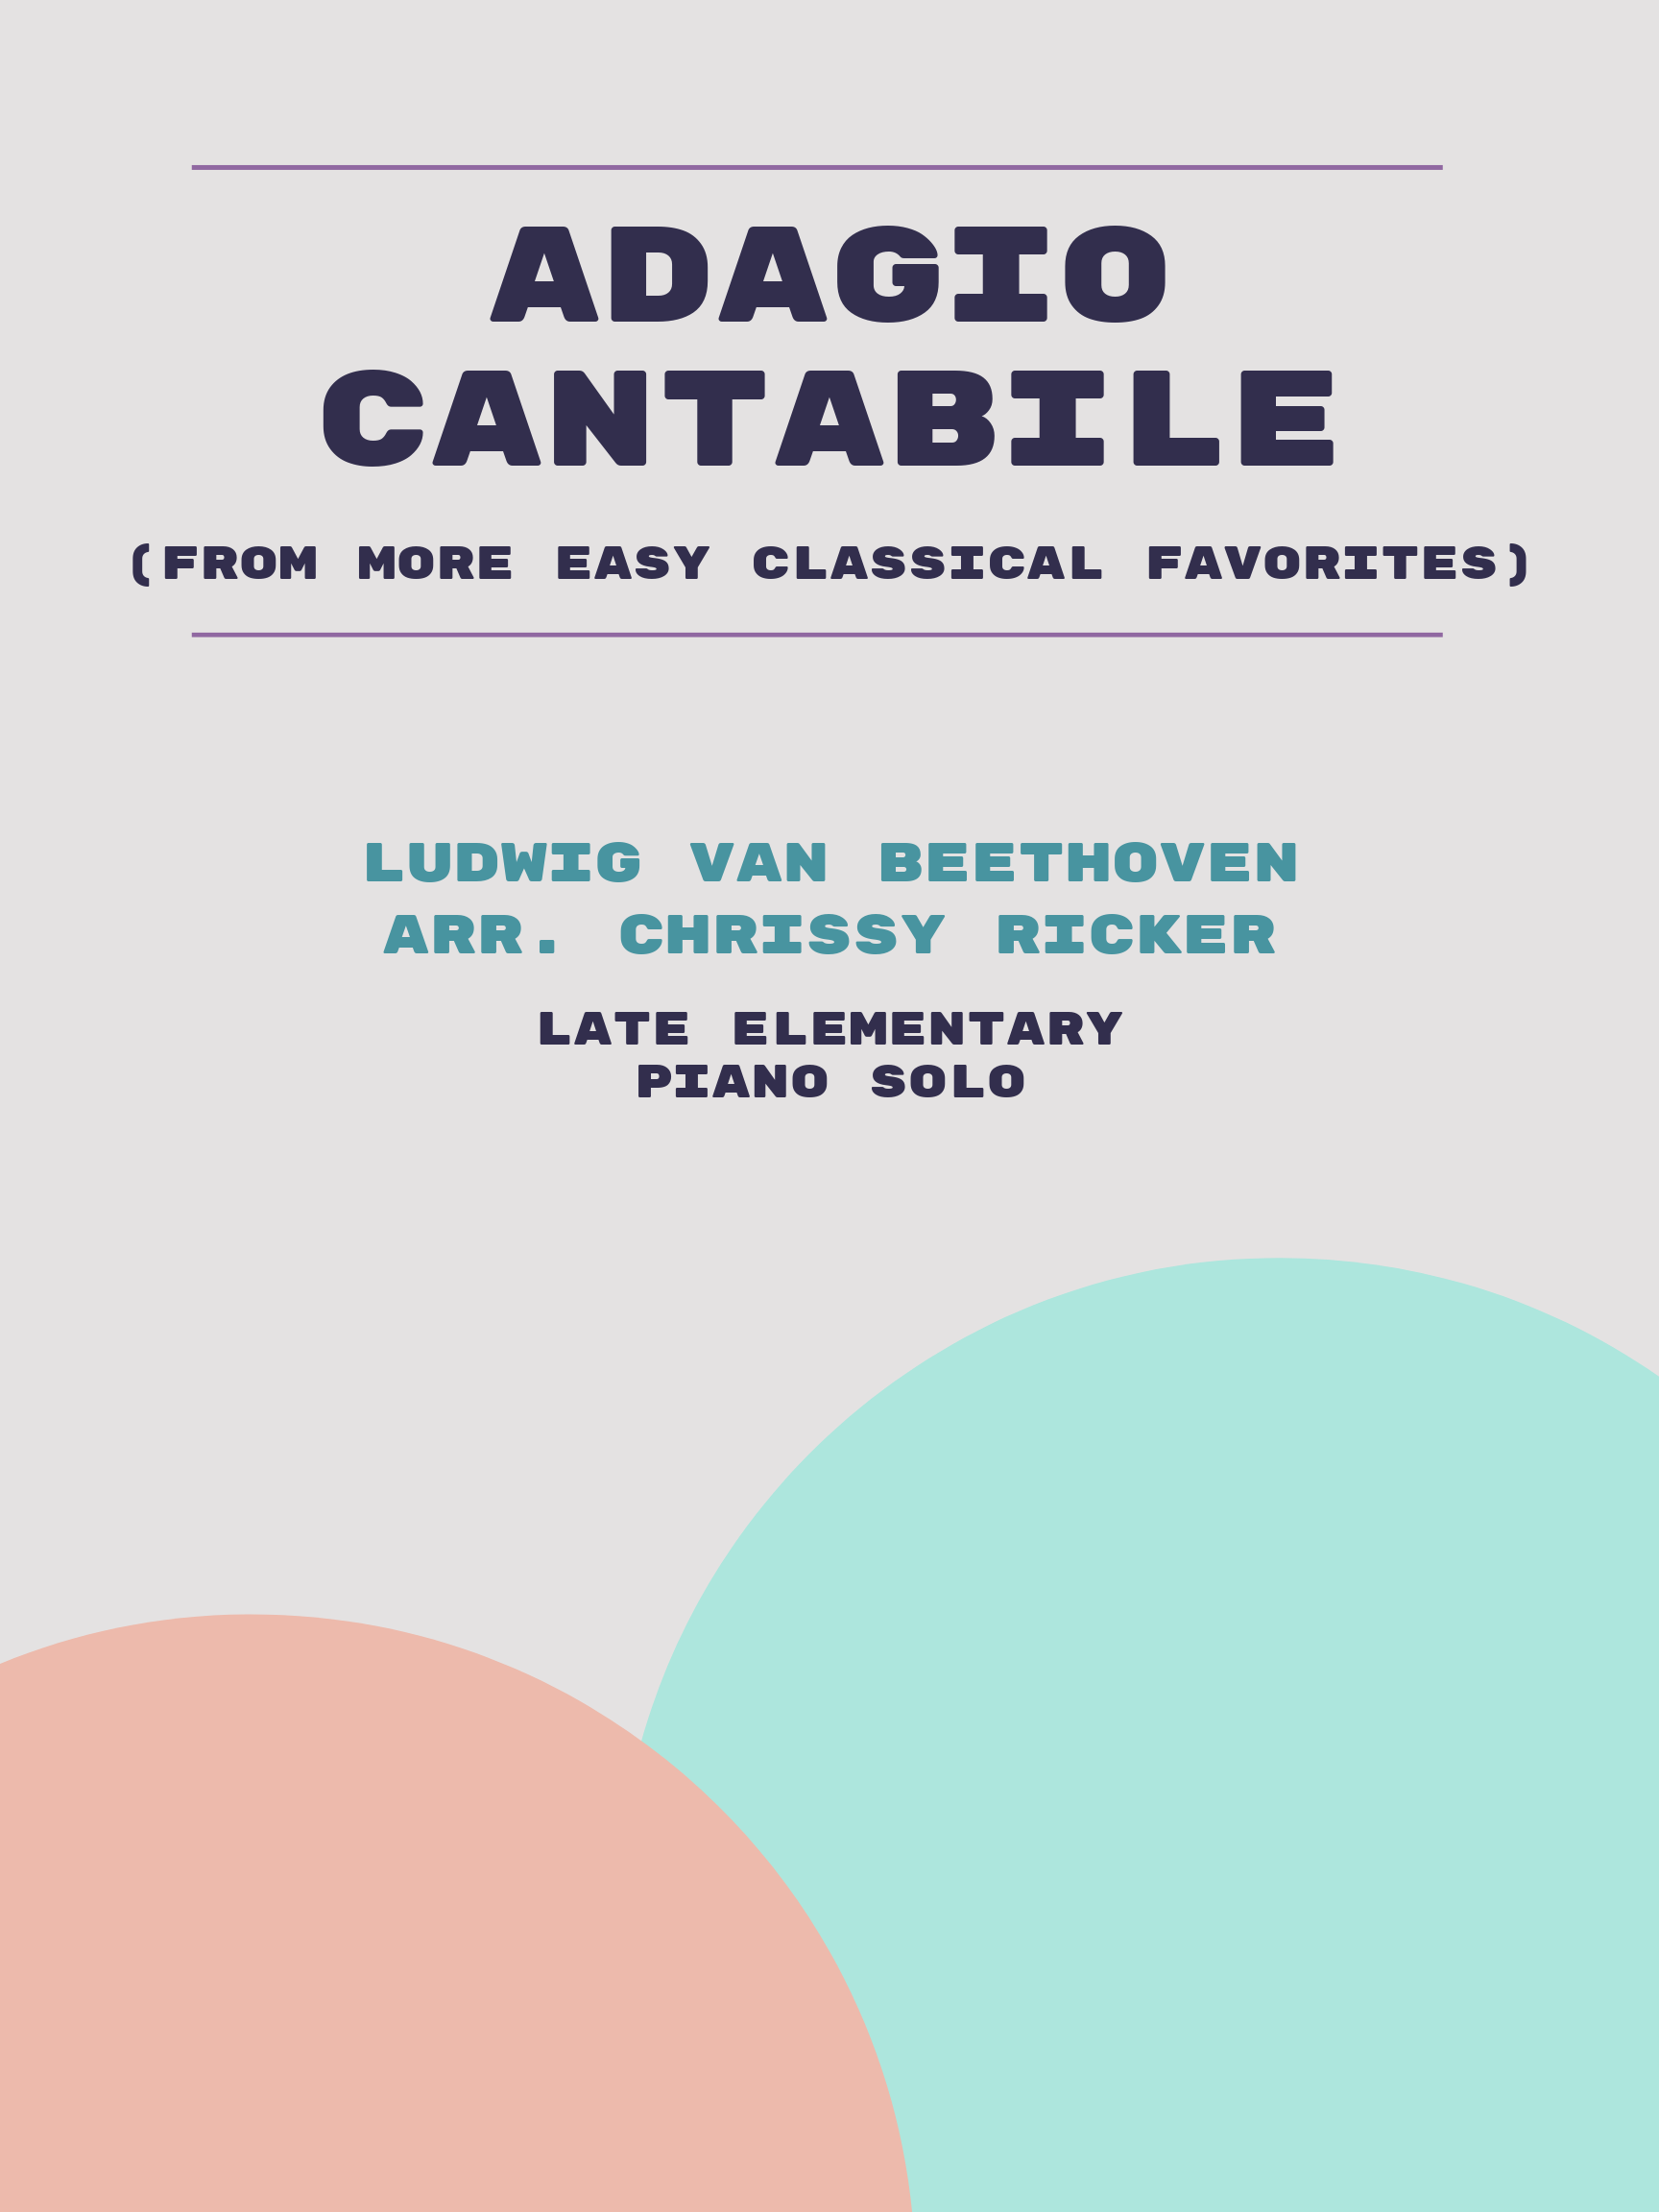 Adagio Cantabile by Ludwig van Beethoven